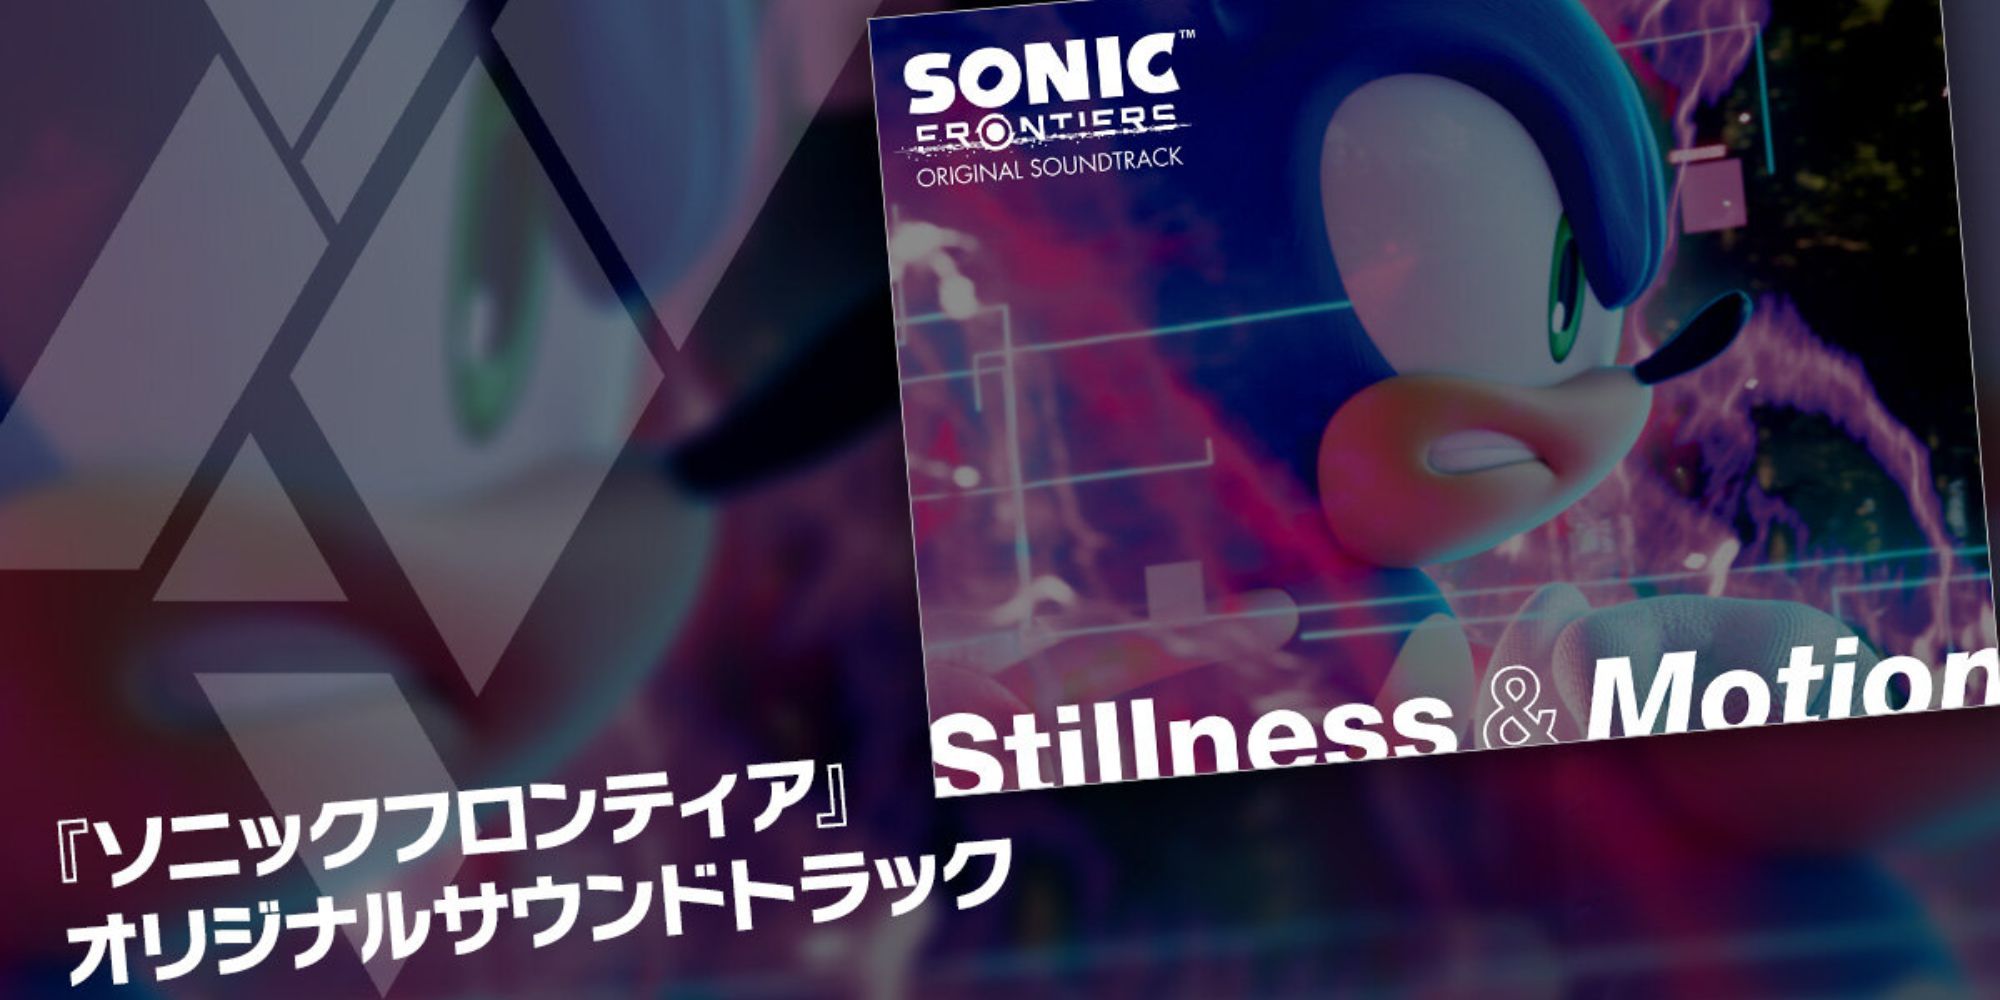 sonic-frontiers-soundtrack